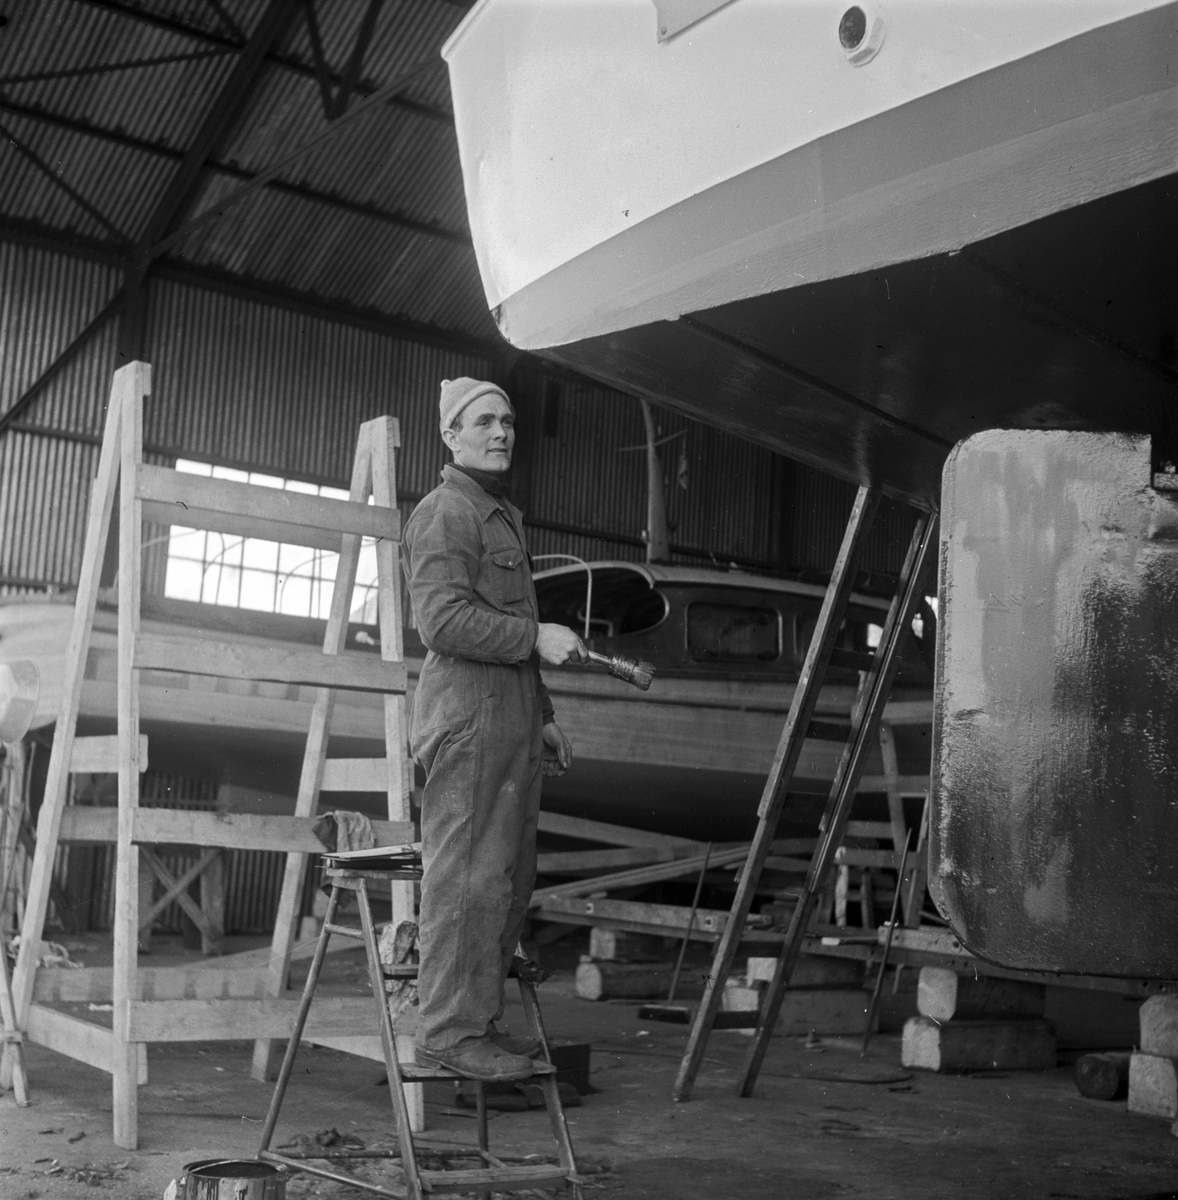 Serie. Bygdøyfergen "Båtservice IV" ligger på land for vedlikehold. Fotografert 8. april 1954.